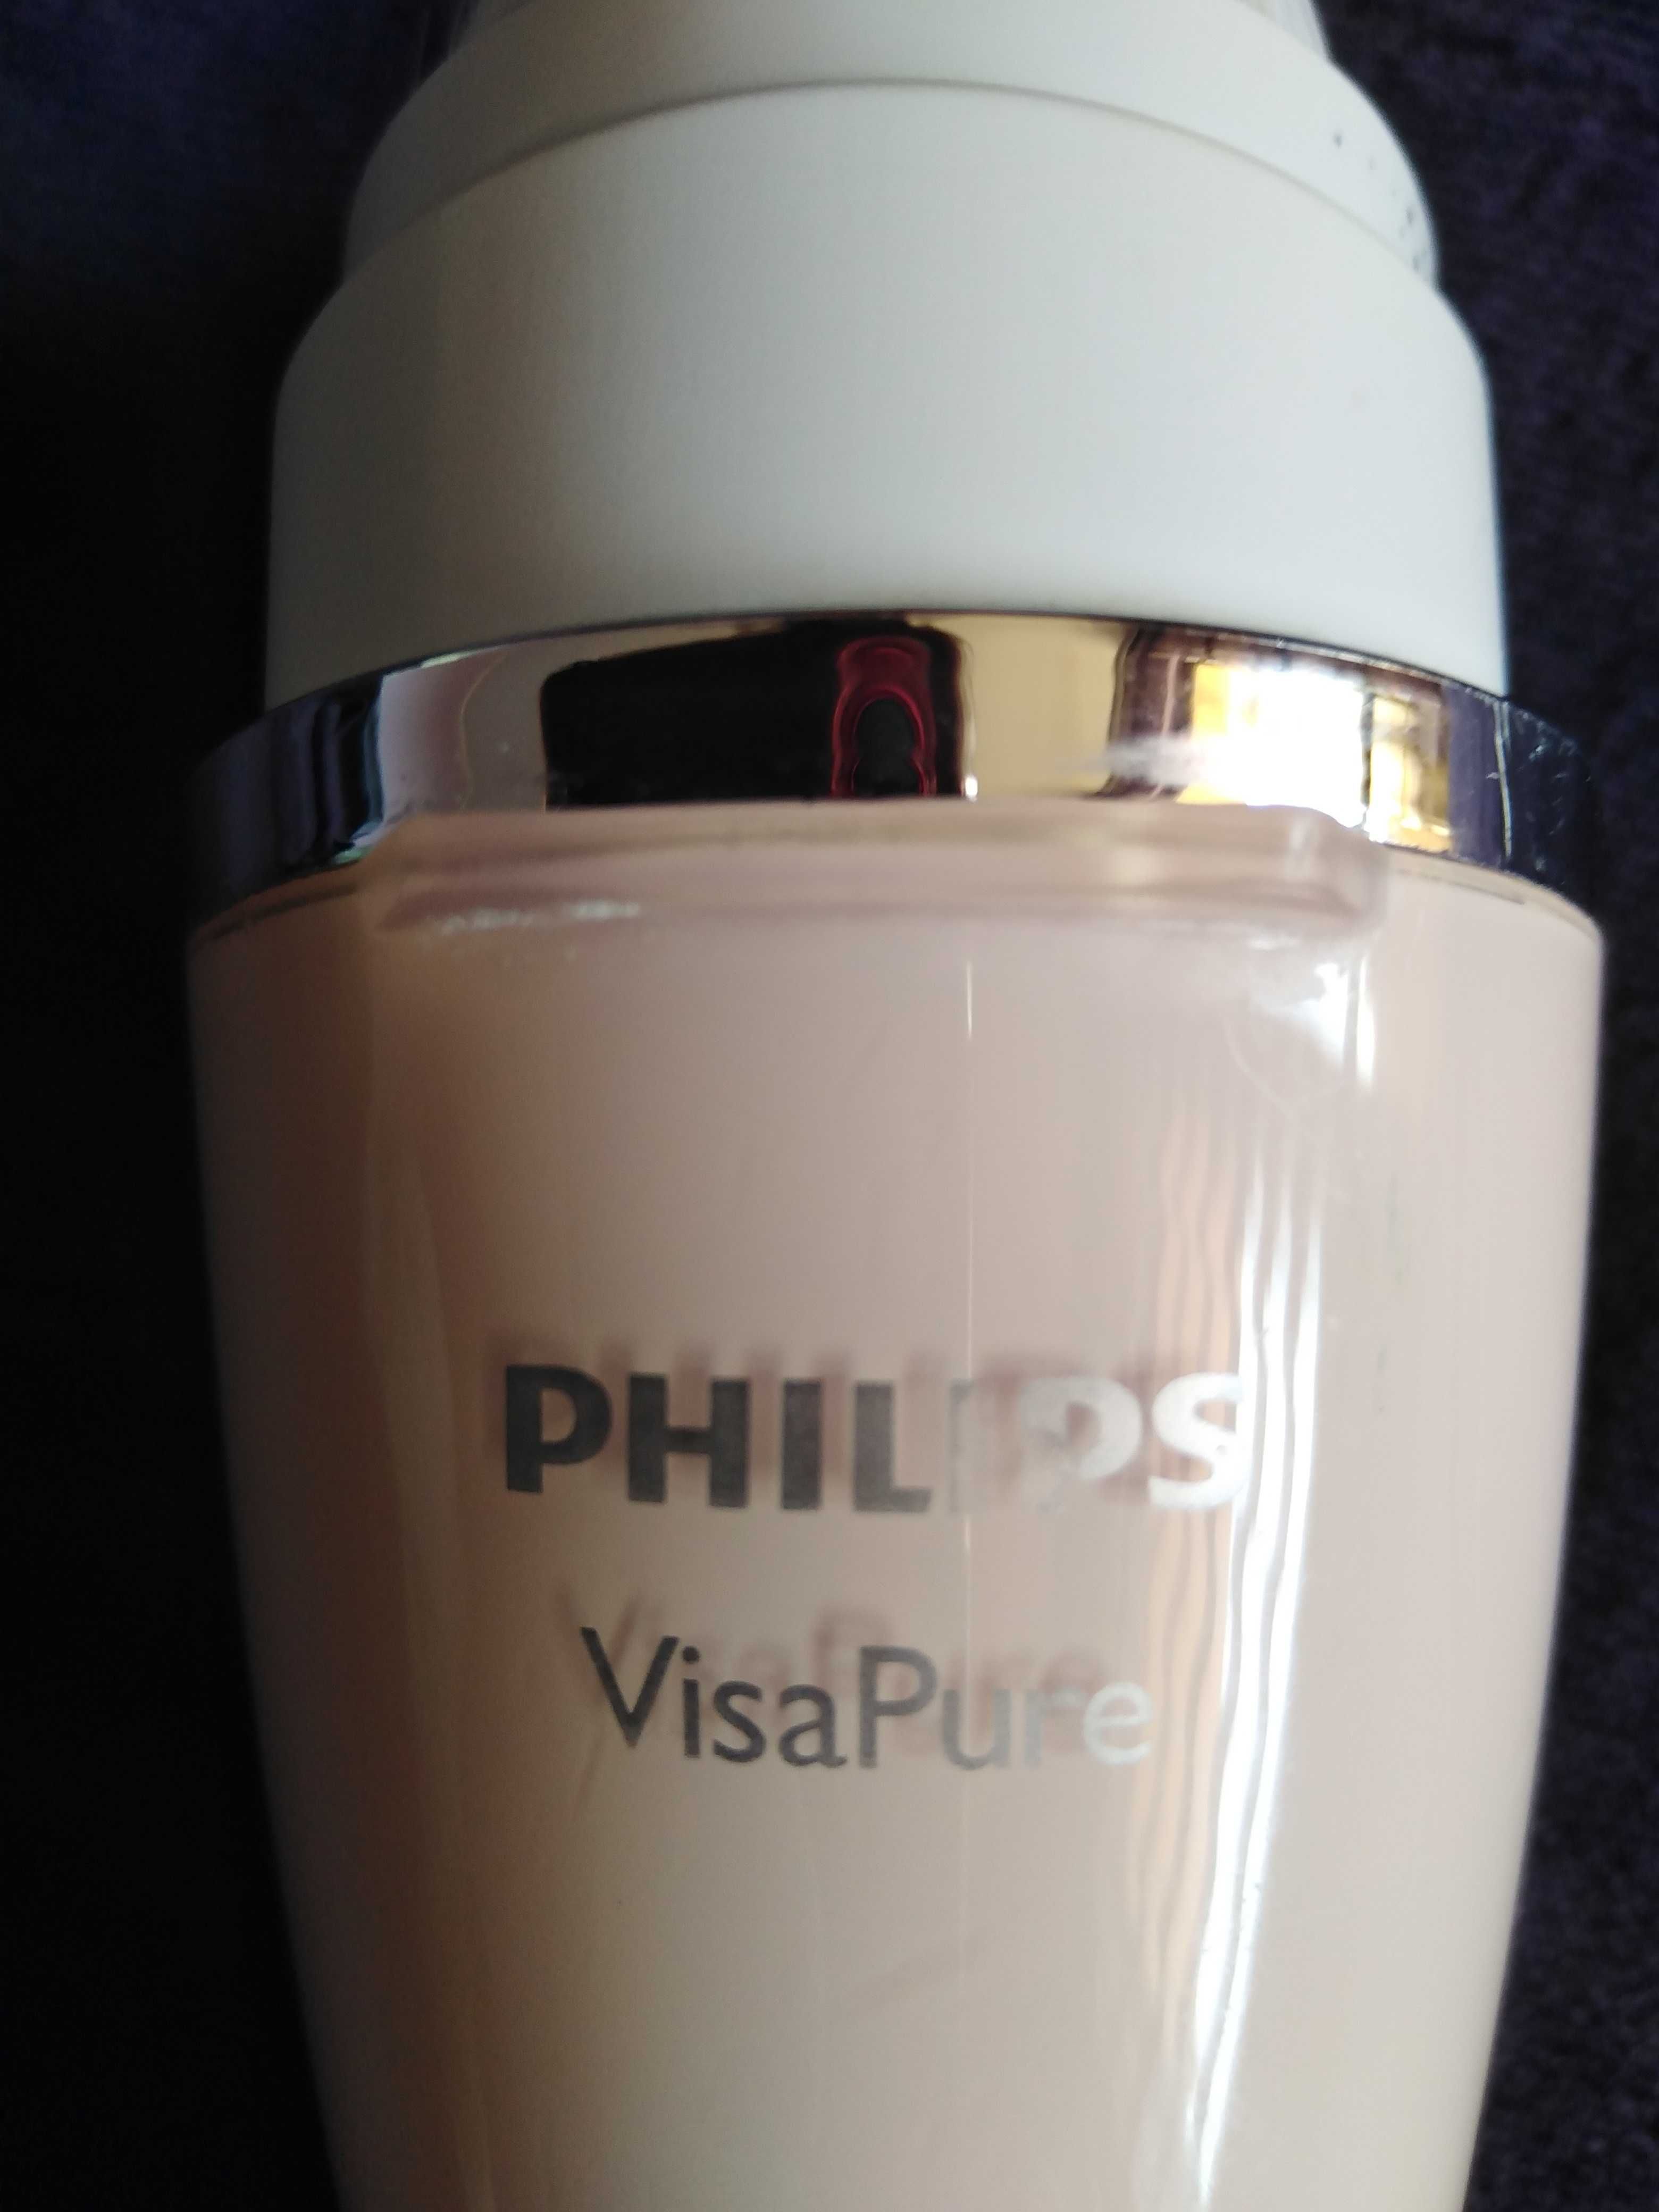 Без зарядно!!!Четка за почистване на лице Philips VisaPure+подарък